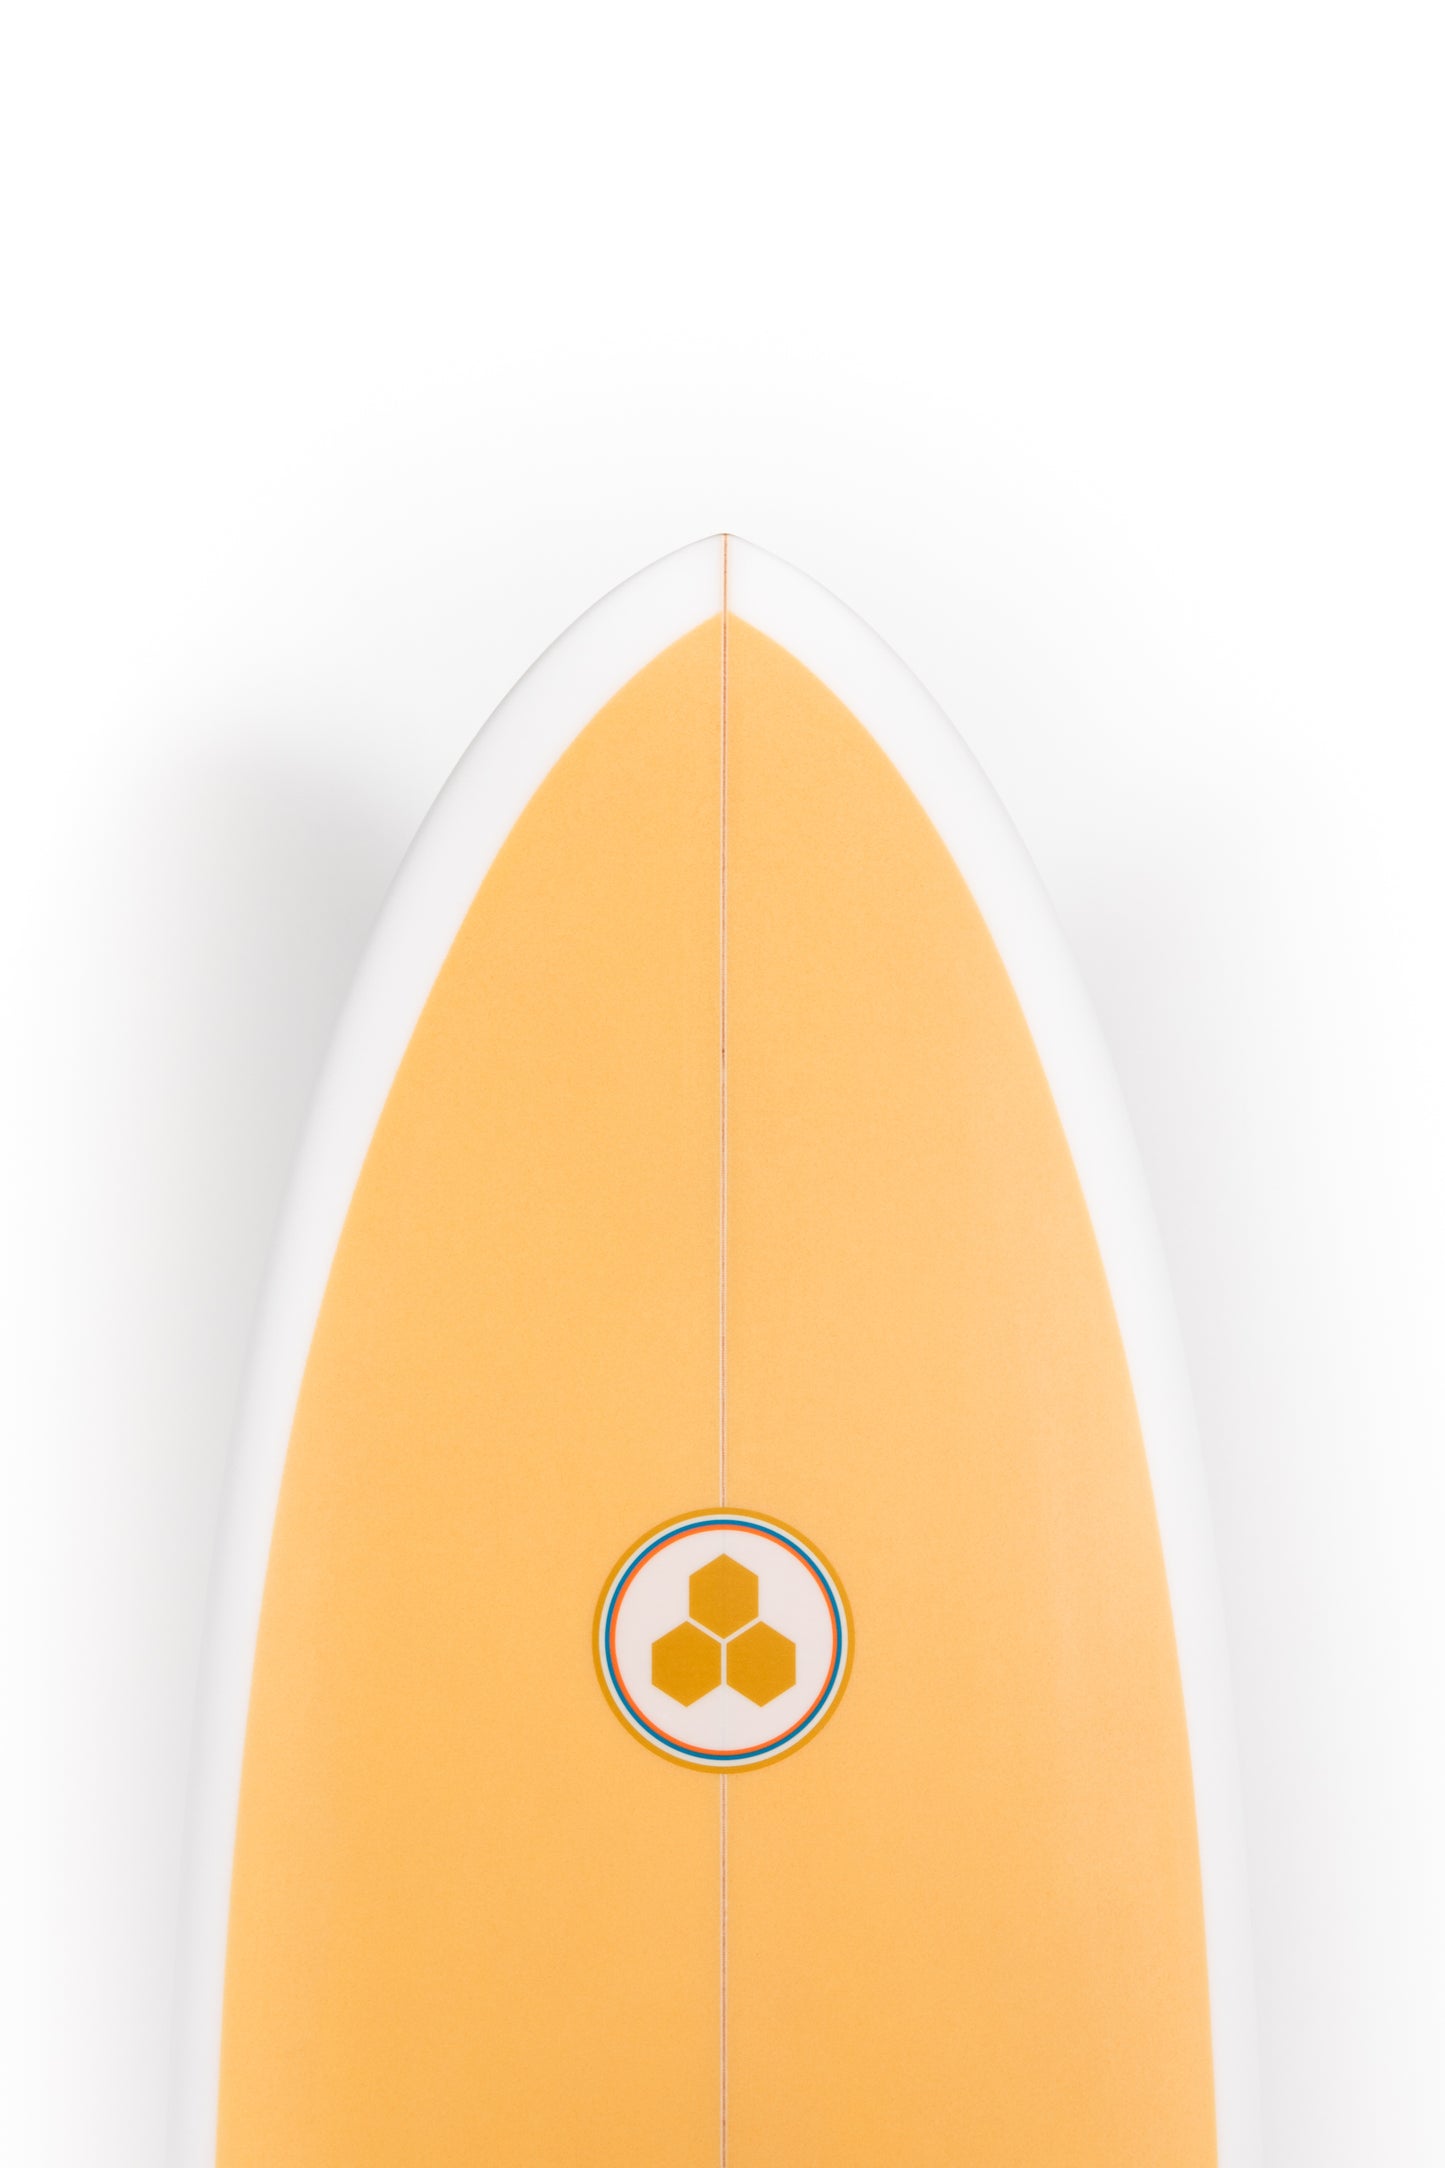 
                  
                    Pukas-Surf-Shop-Channel-Island-Surfboards-G-Skate-Al-Merrick-6_2_-CI28607
                  
                